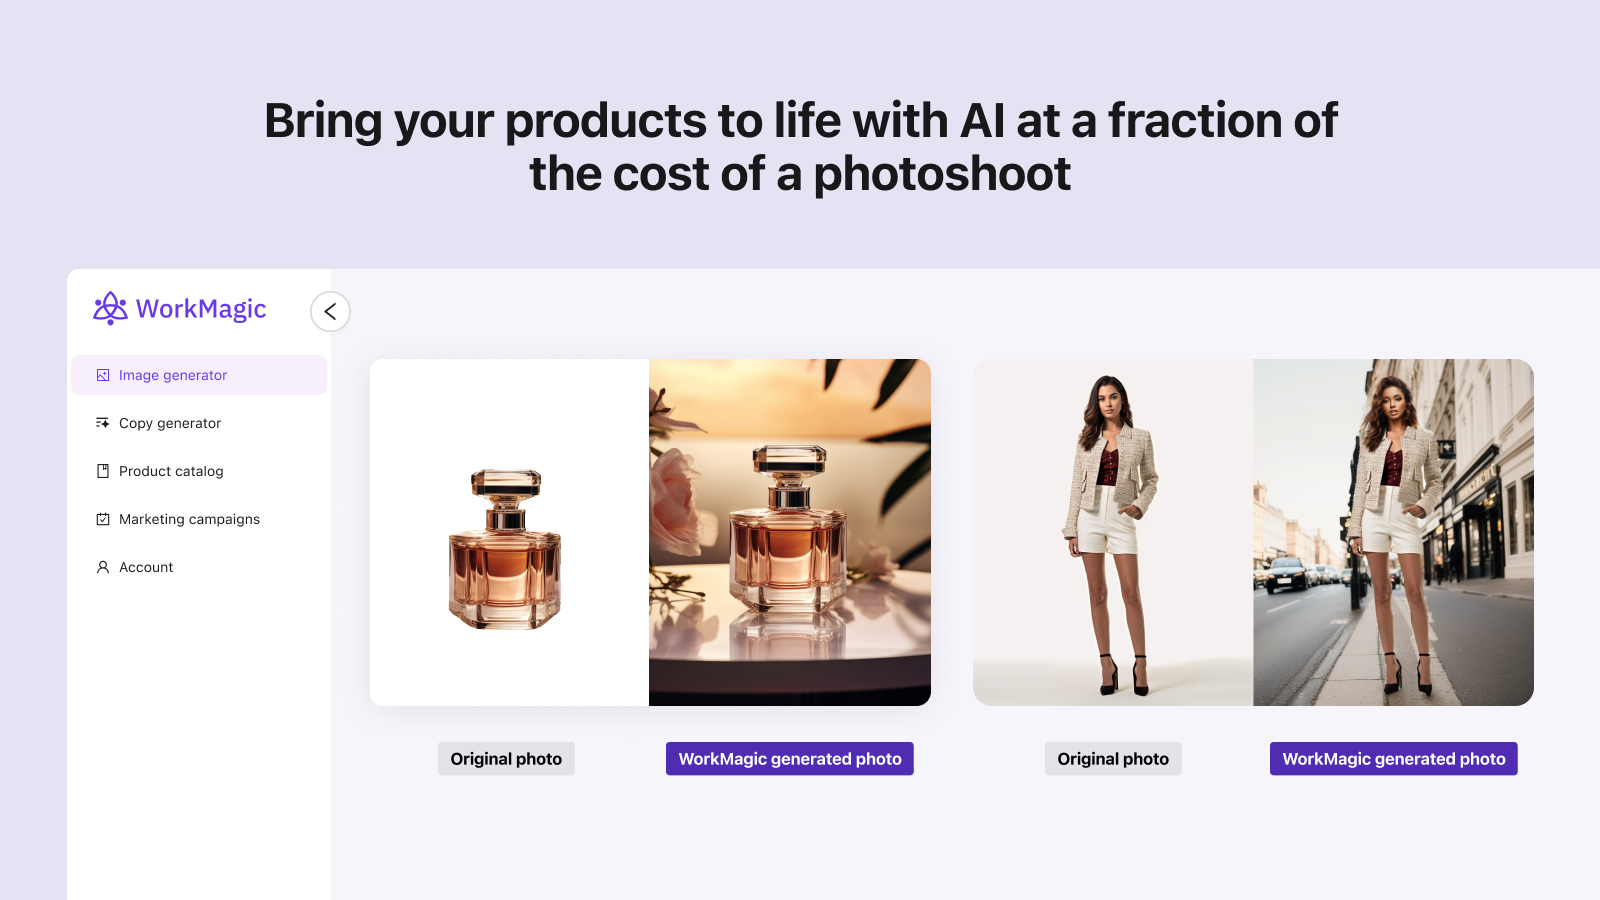 WorkMagic AI product photo and AI model photo examples